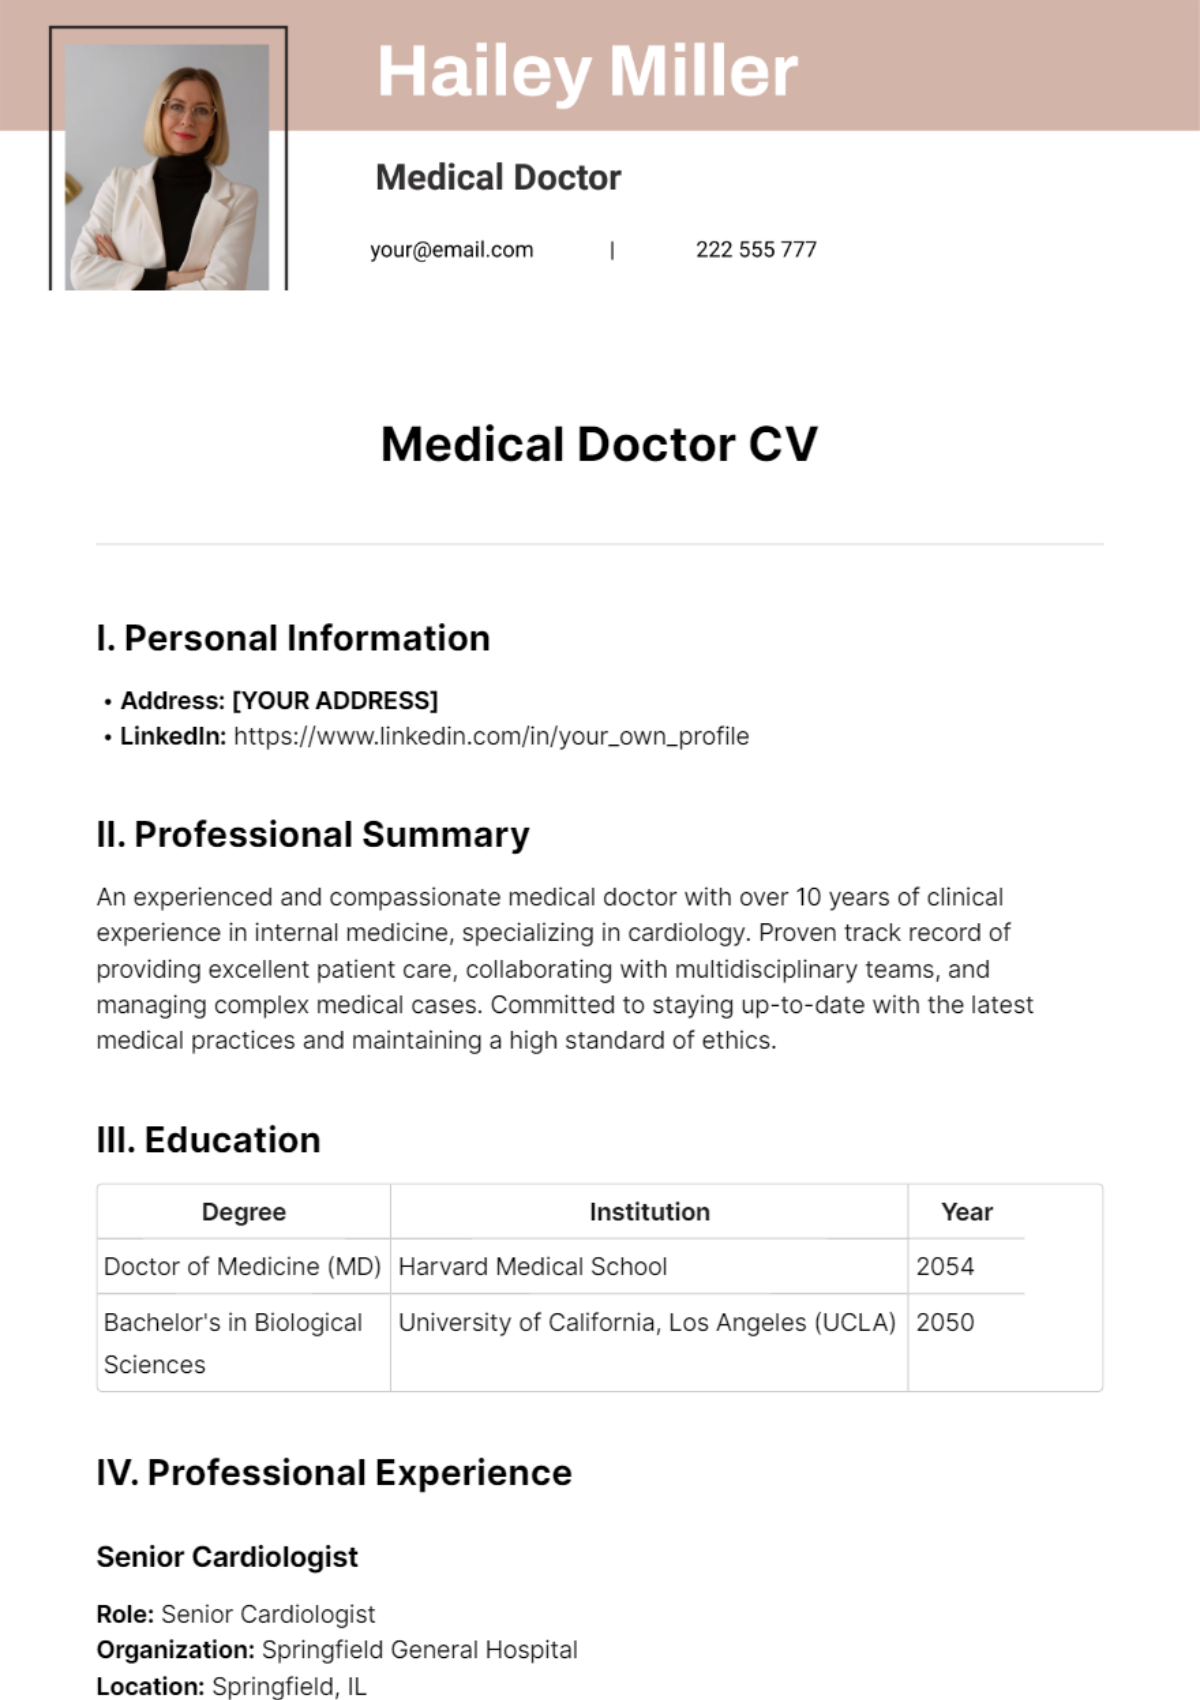 Medical Doctor CV Template